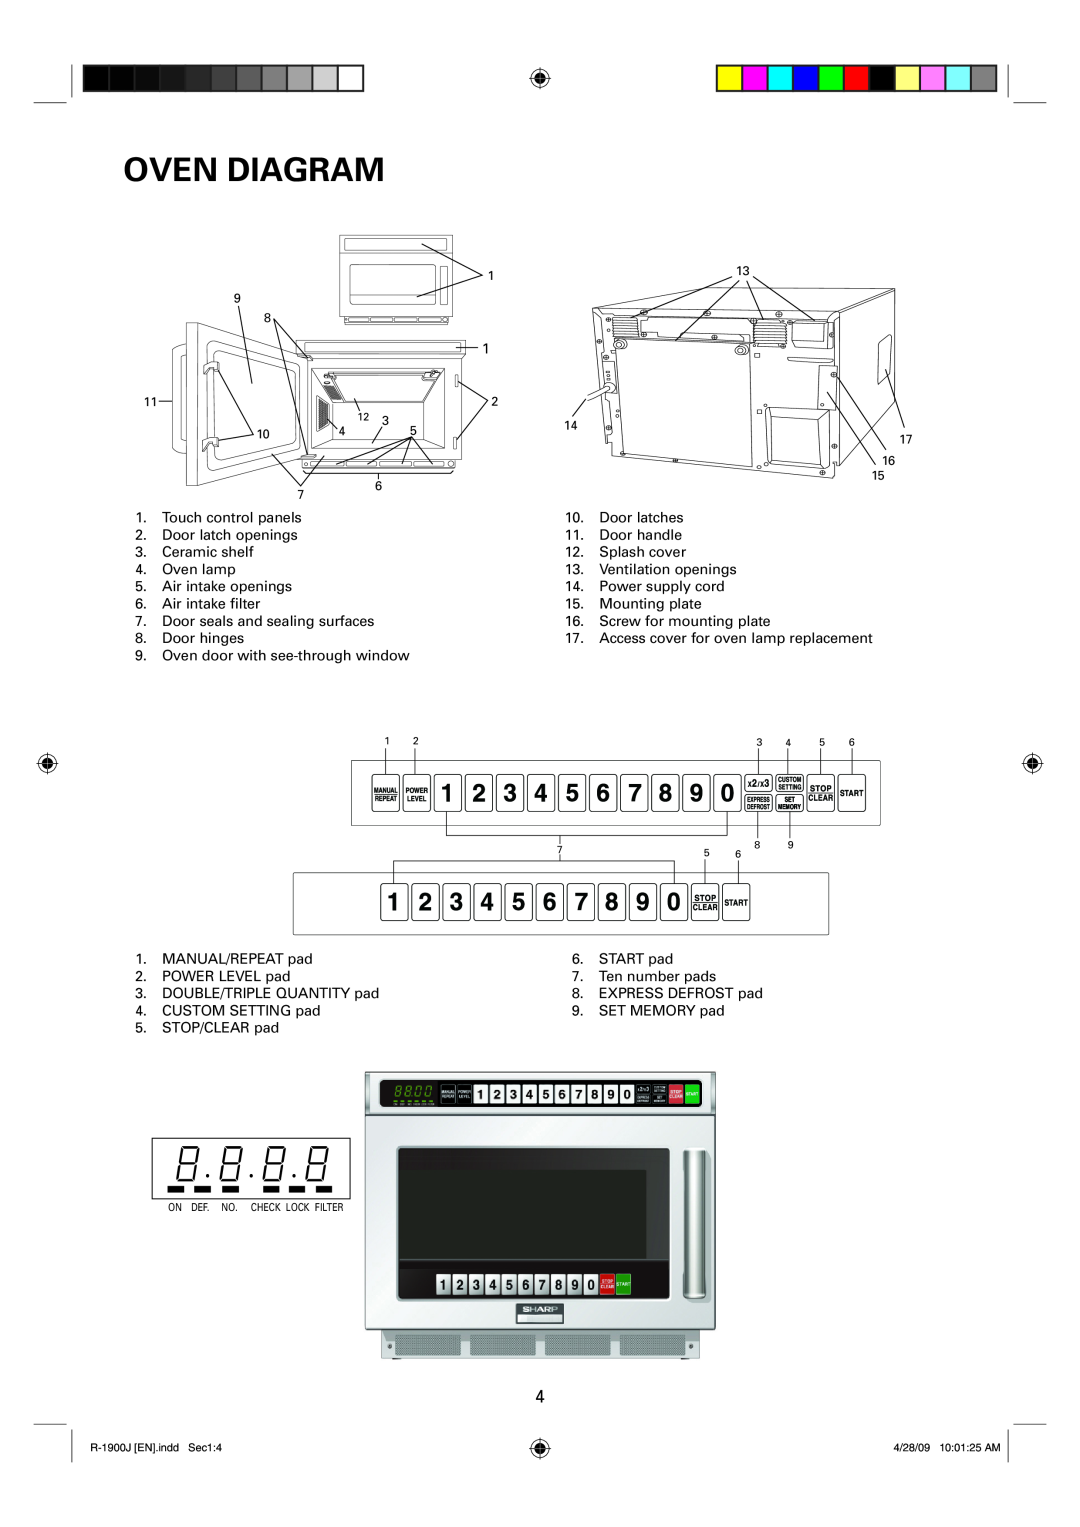 Sharp R-1900J operation manual Oven Diagram 